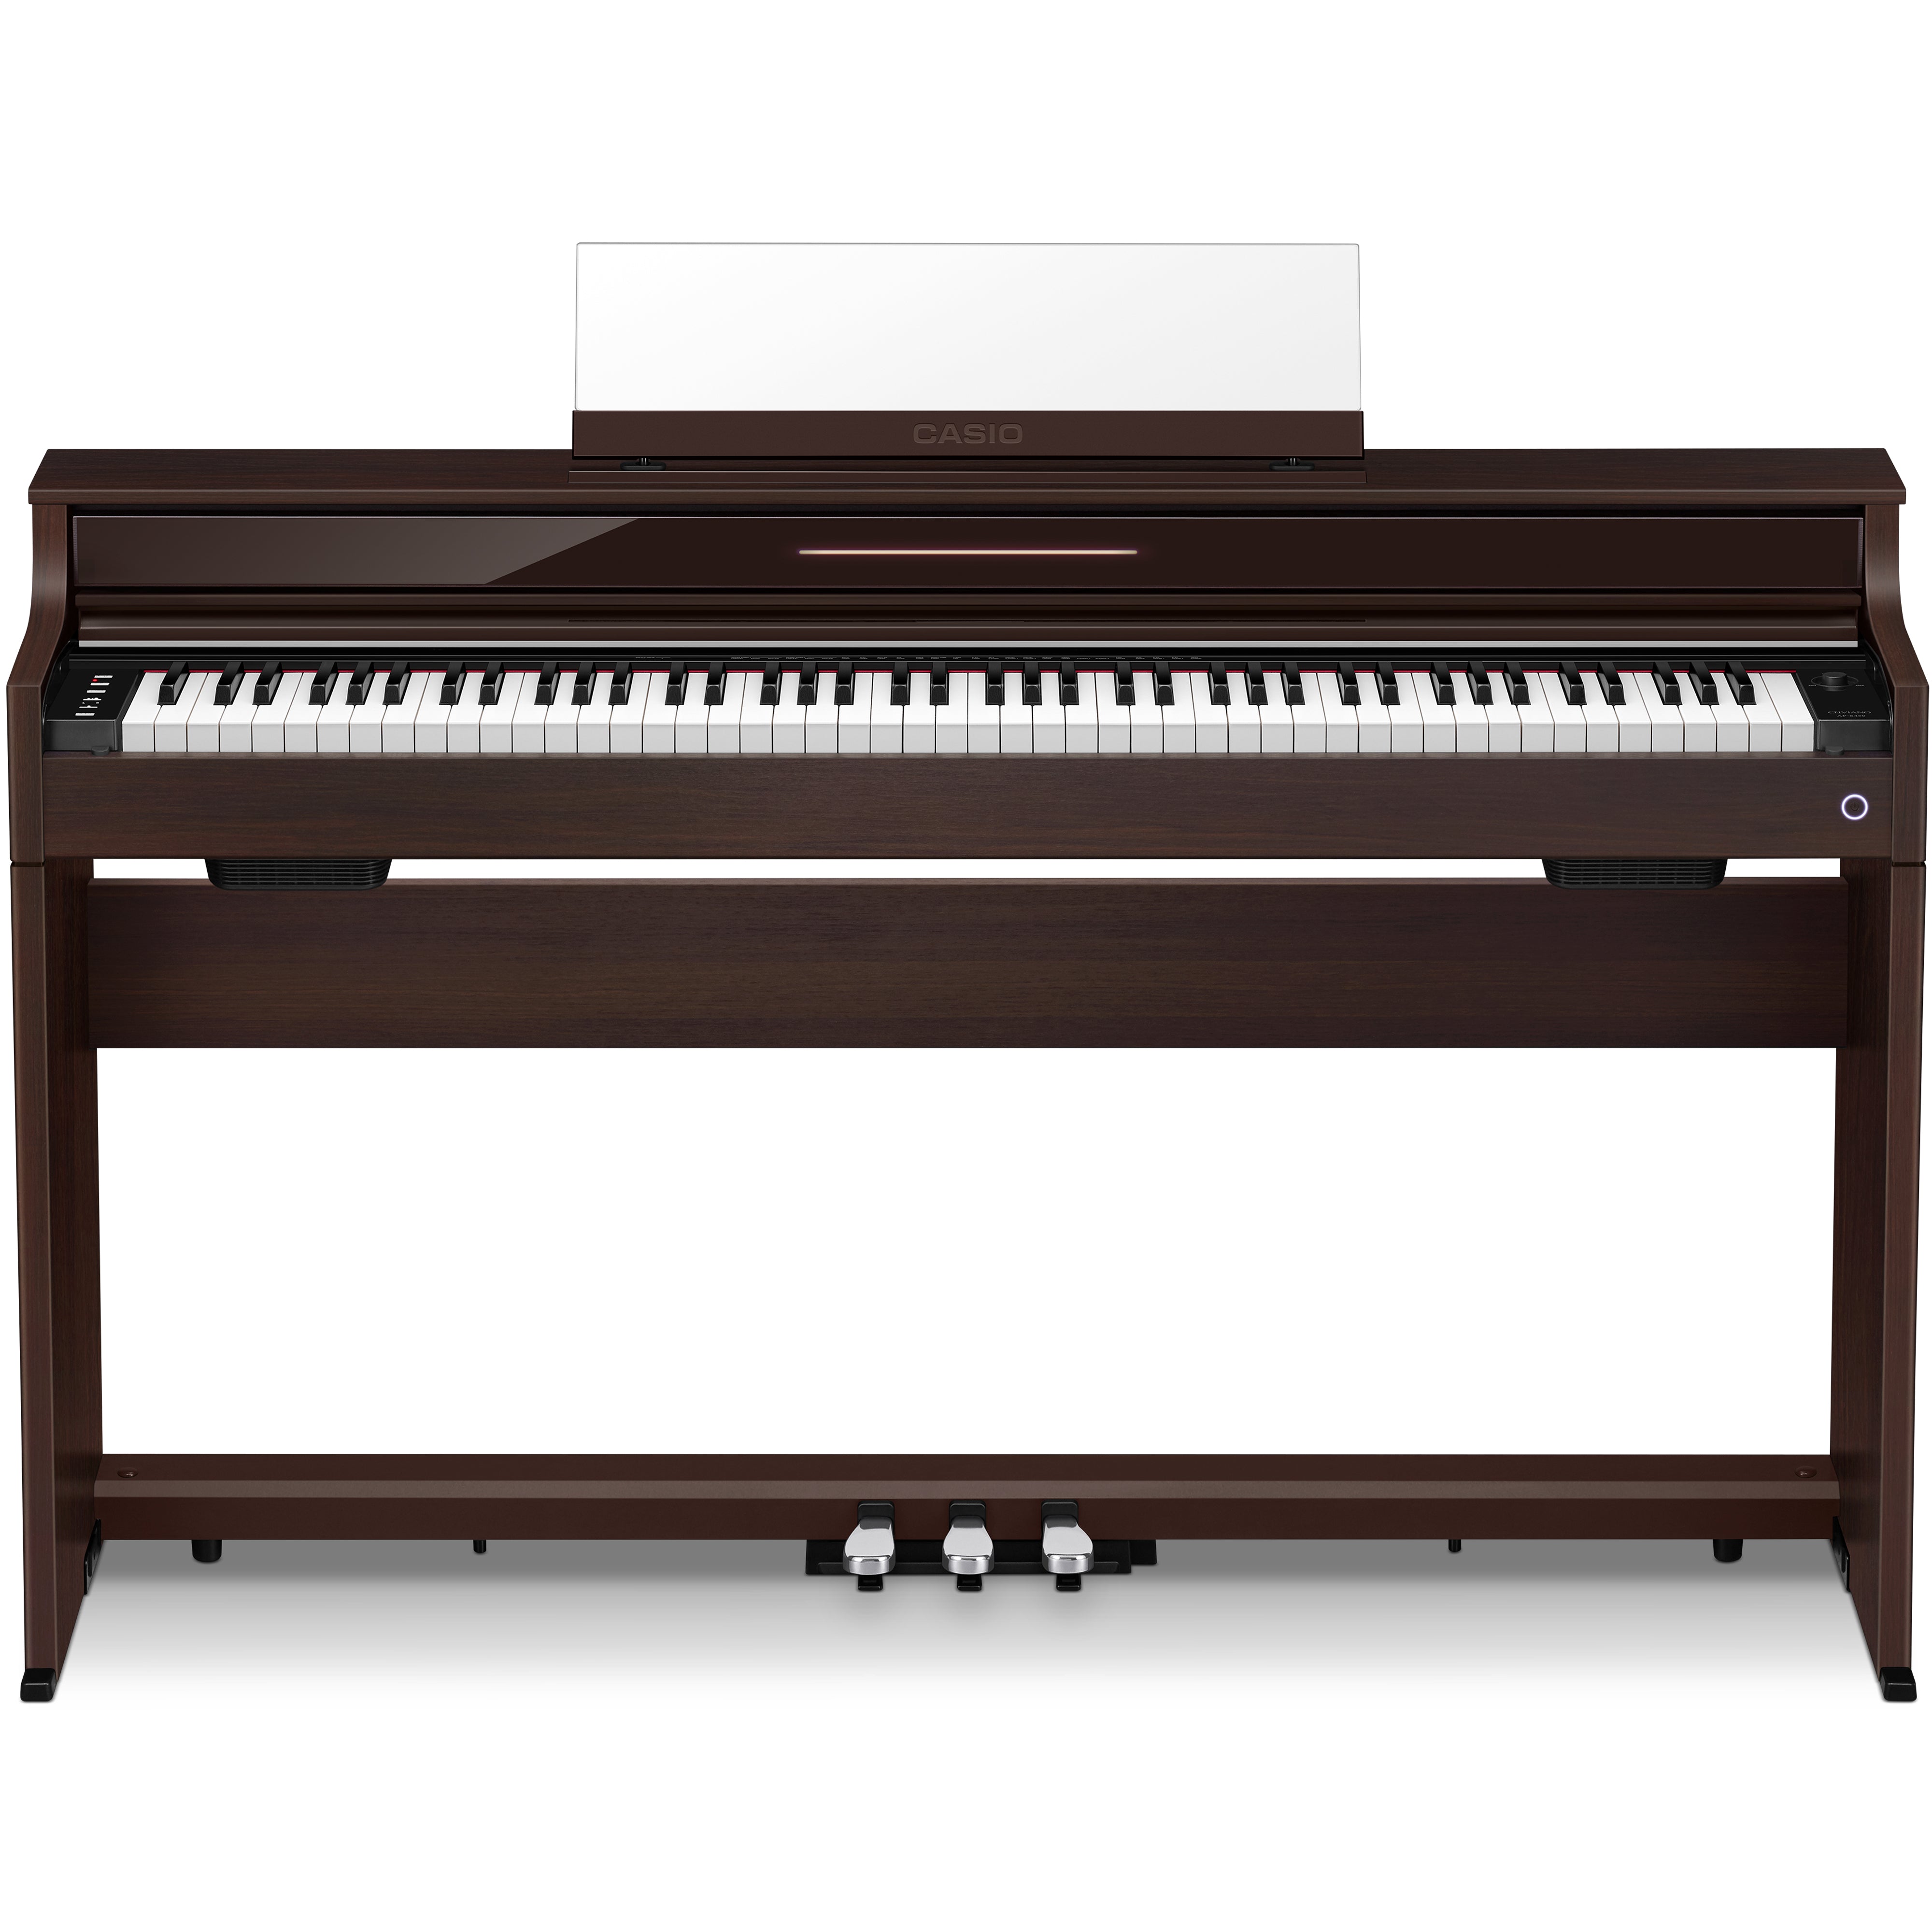 Casio Celviano AP-S450 Digital Piano - Brown - front